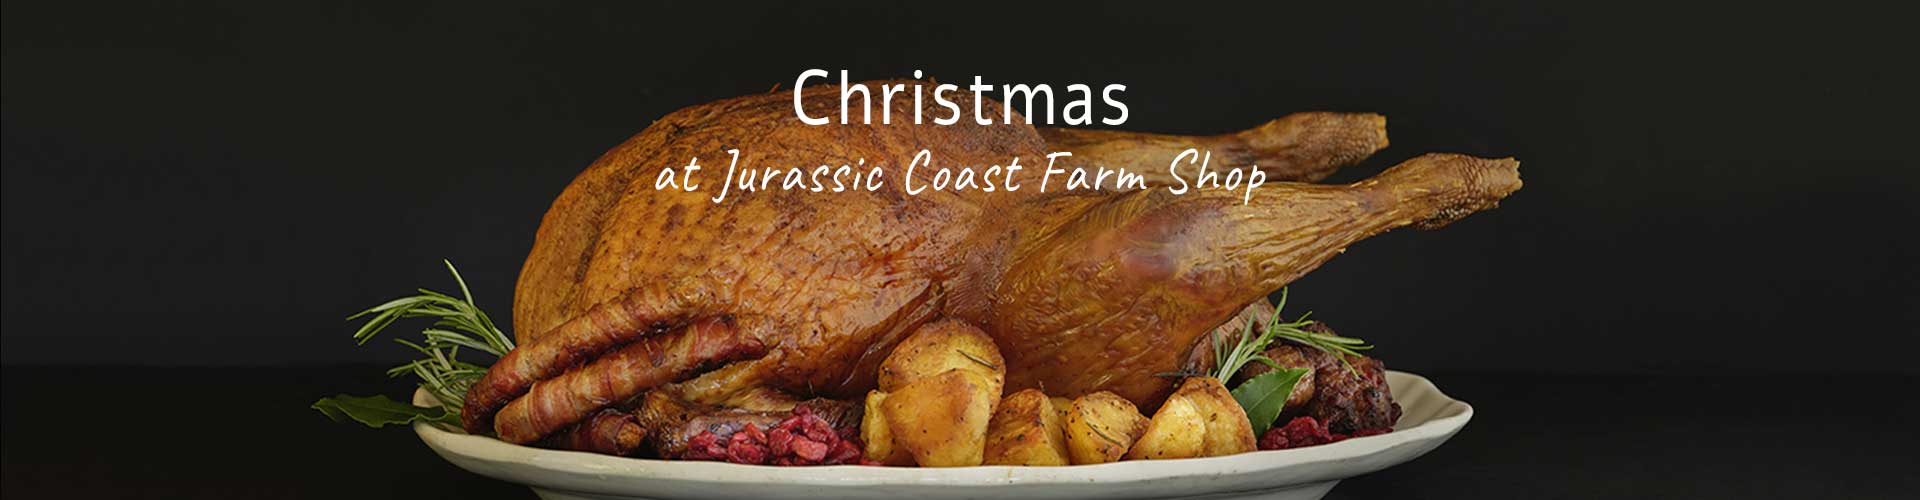 Christmas at Jurassic Coast Farm Shop